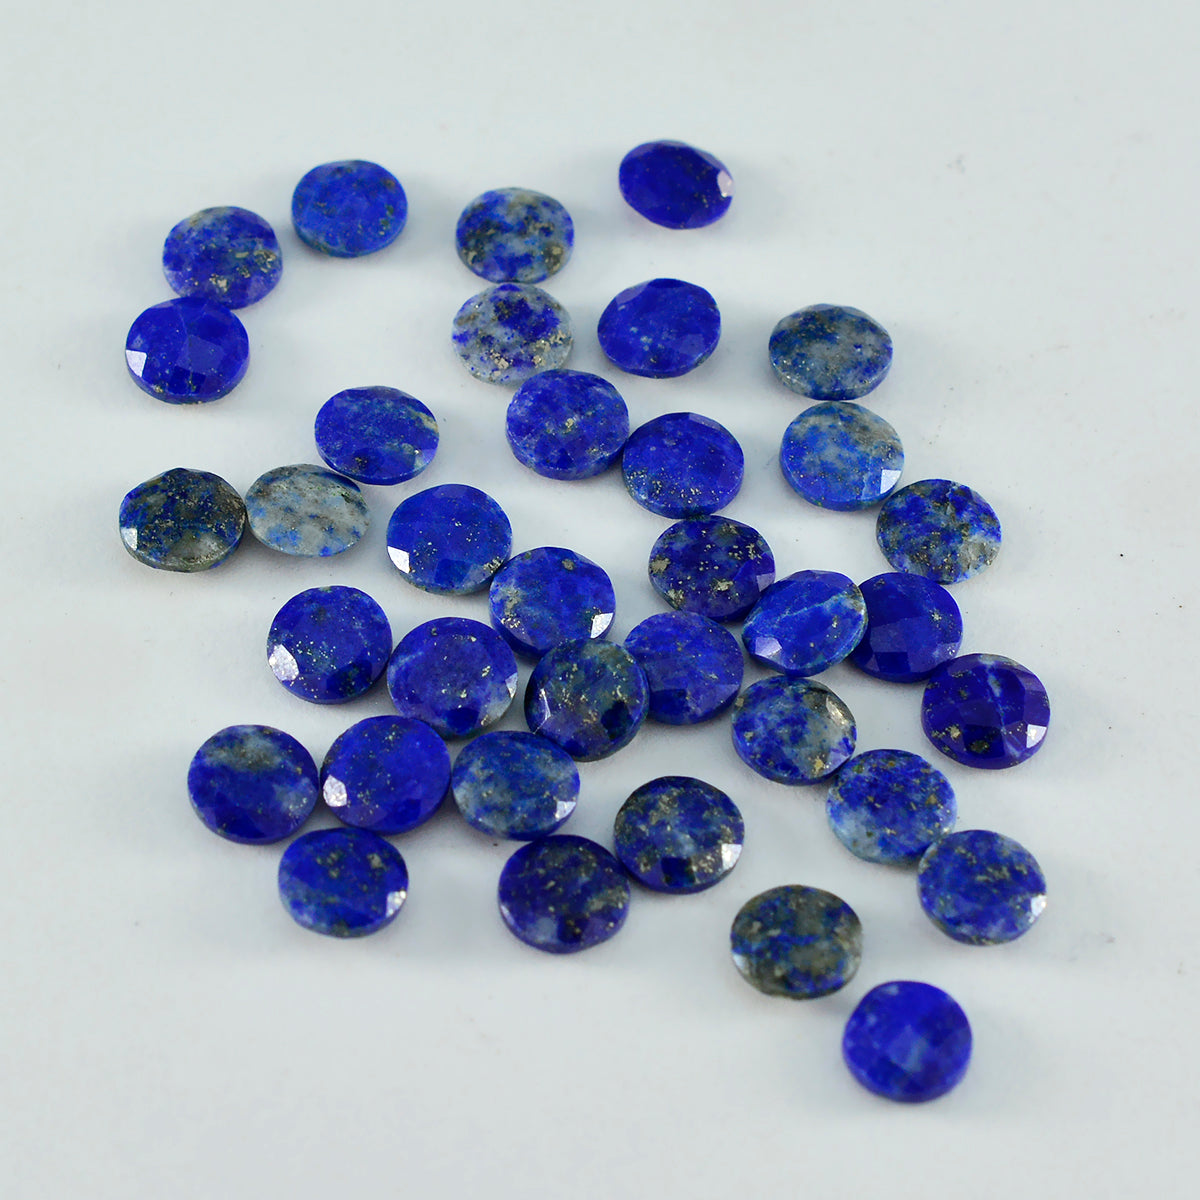 riyogems 1pc 本物のブルー ラピスラズリ ファセット 5x5 mm ラウンド形状のかわいい品質の石